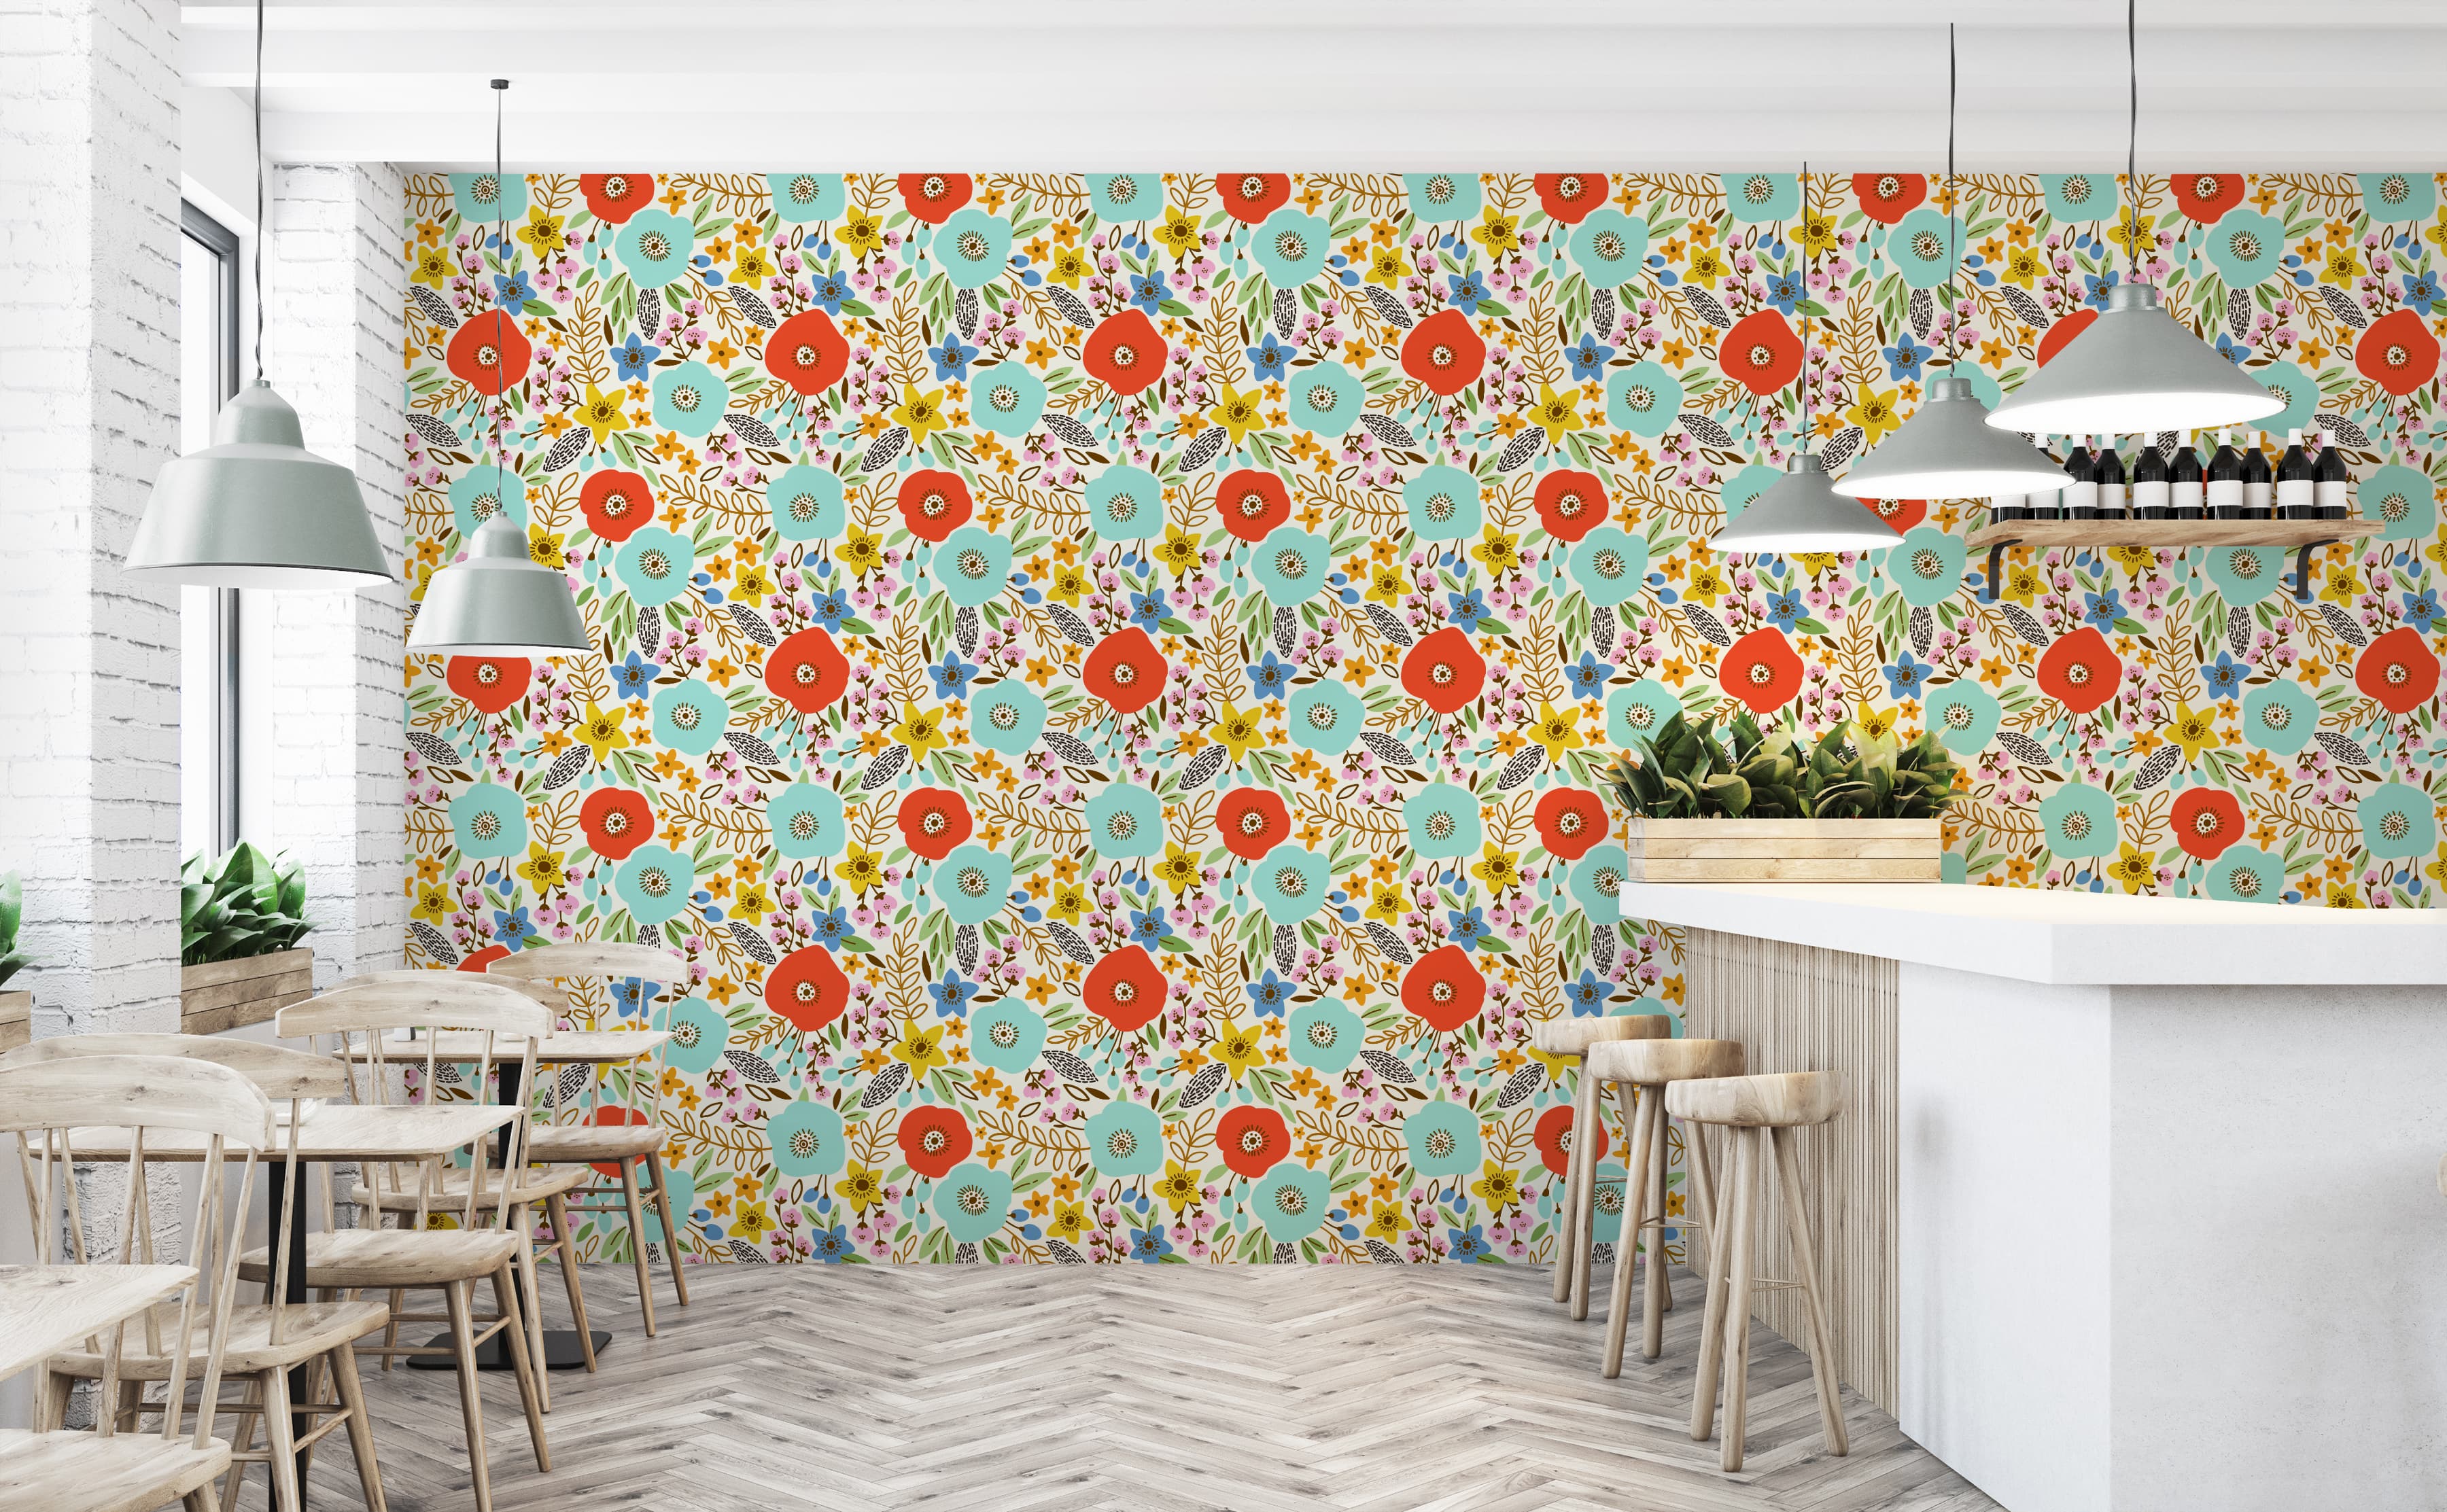 modern floral wallpaper patterns